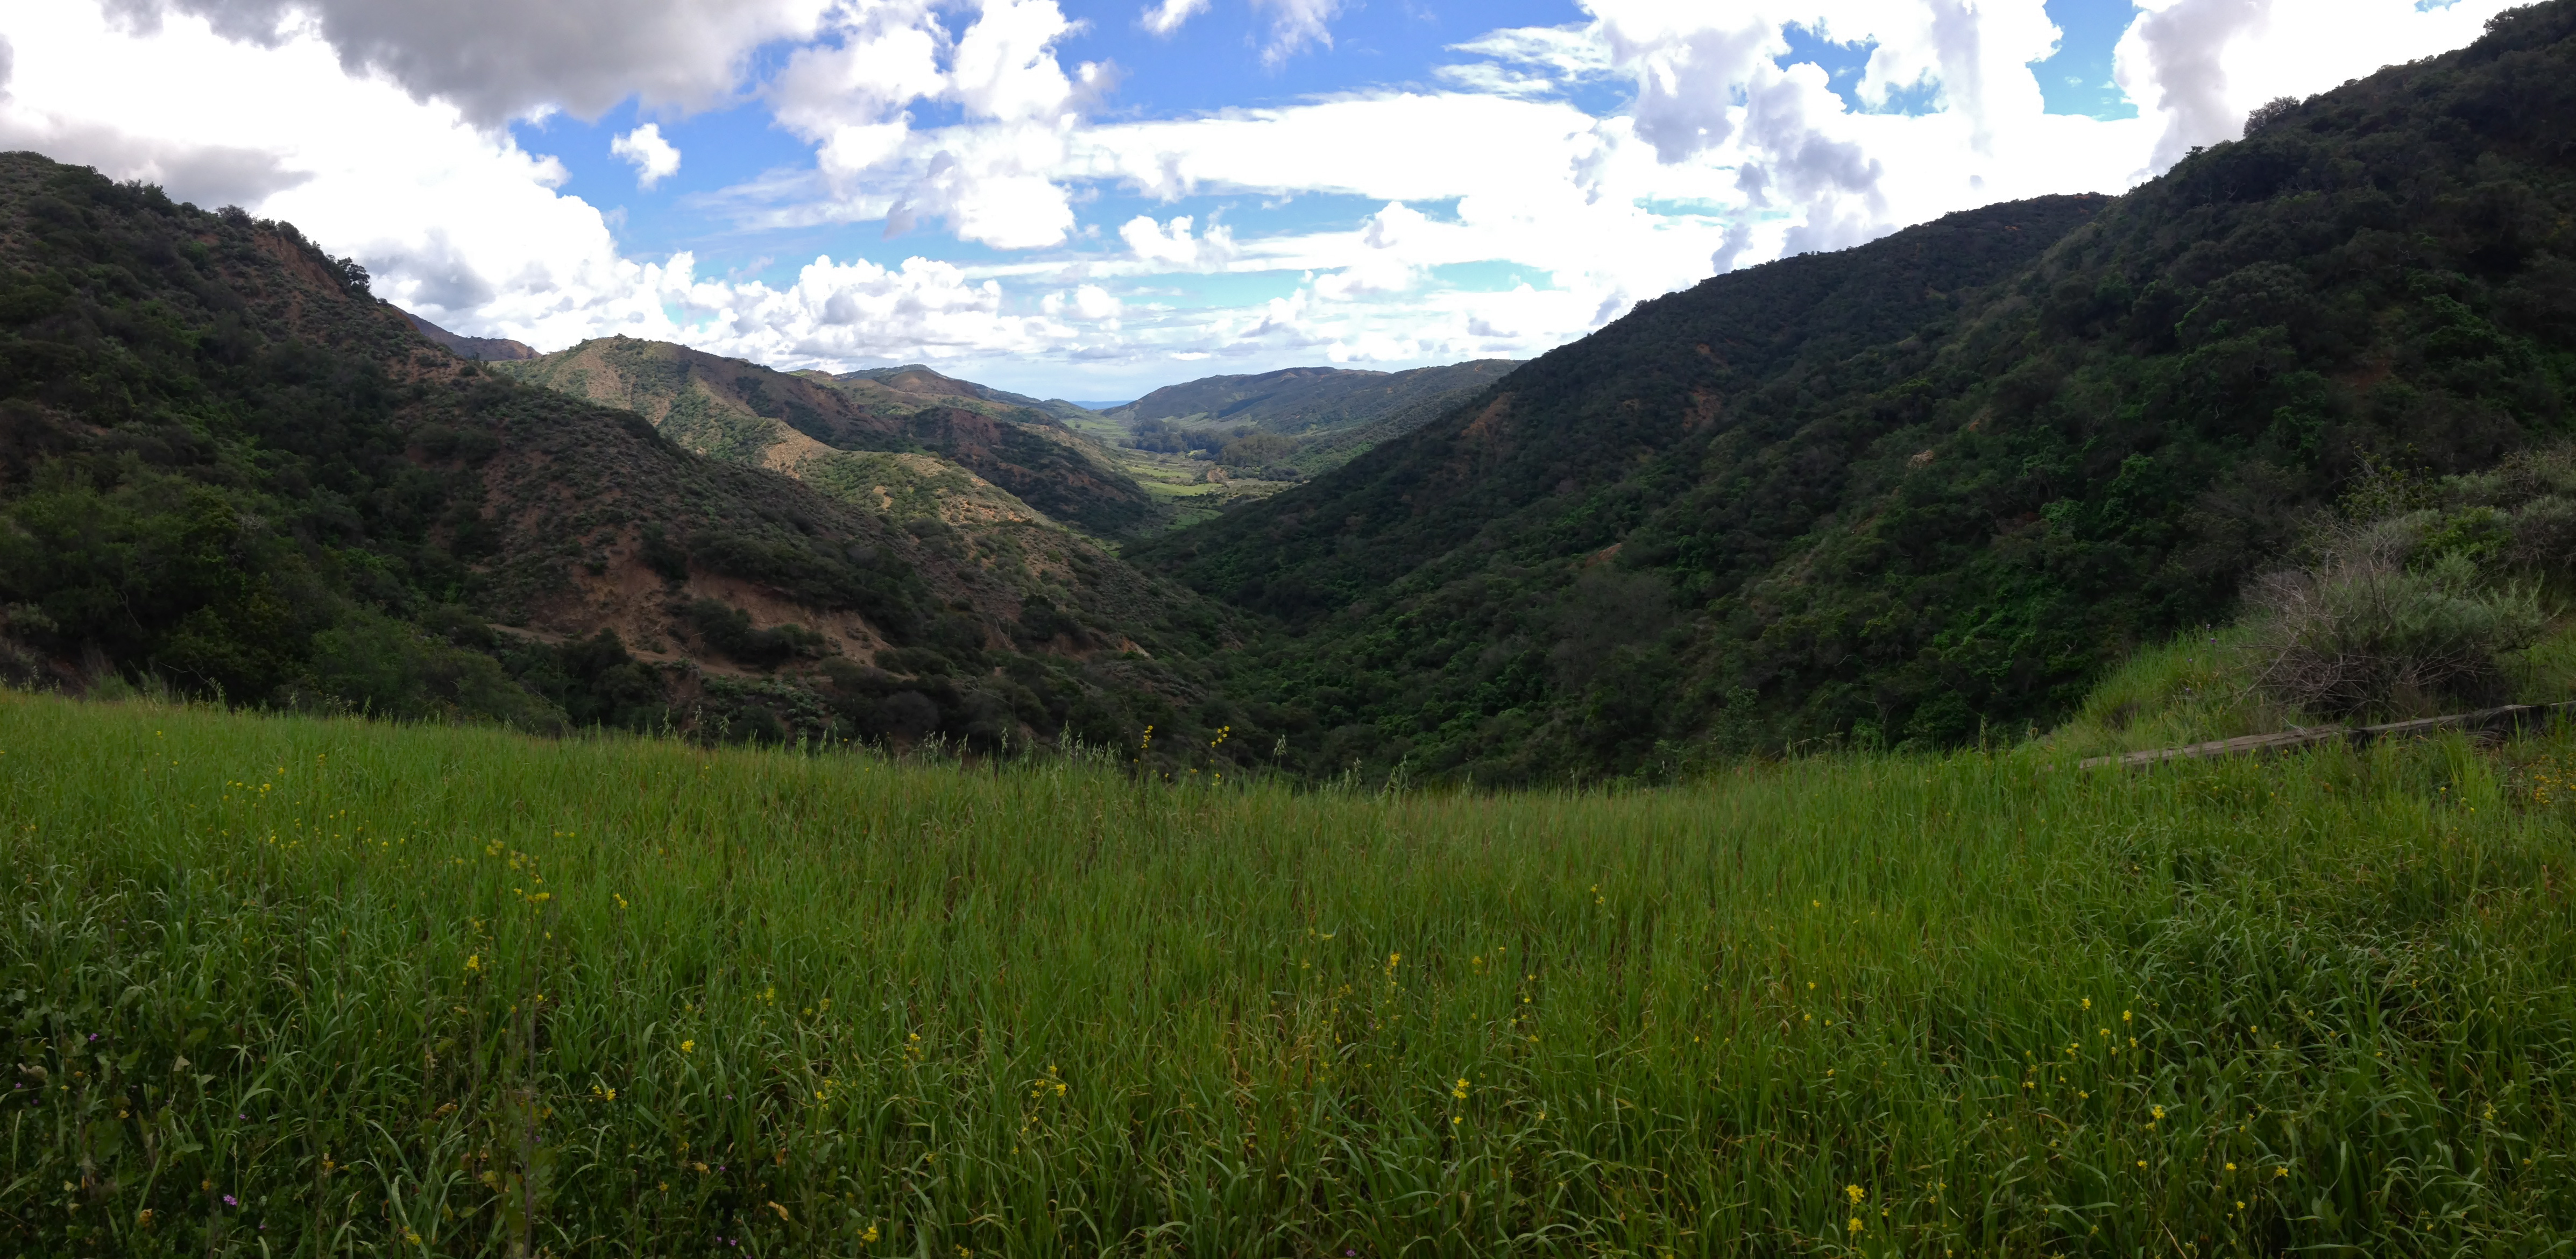 Central valley of Santa Cruz Island, looking from Portezula